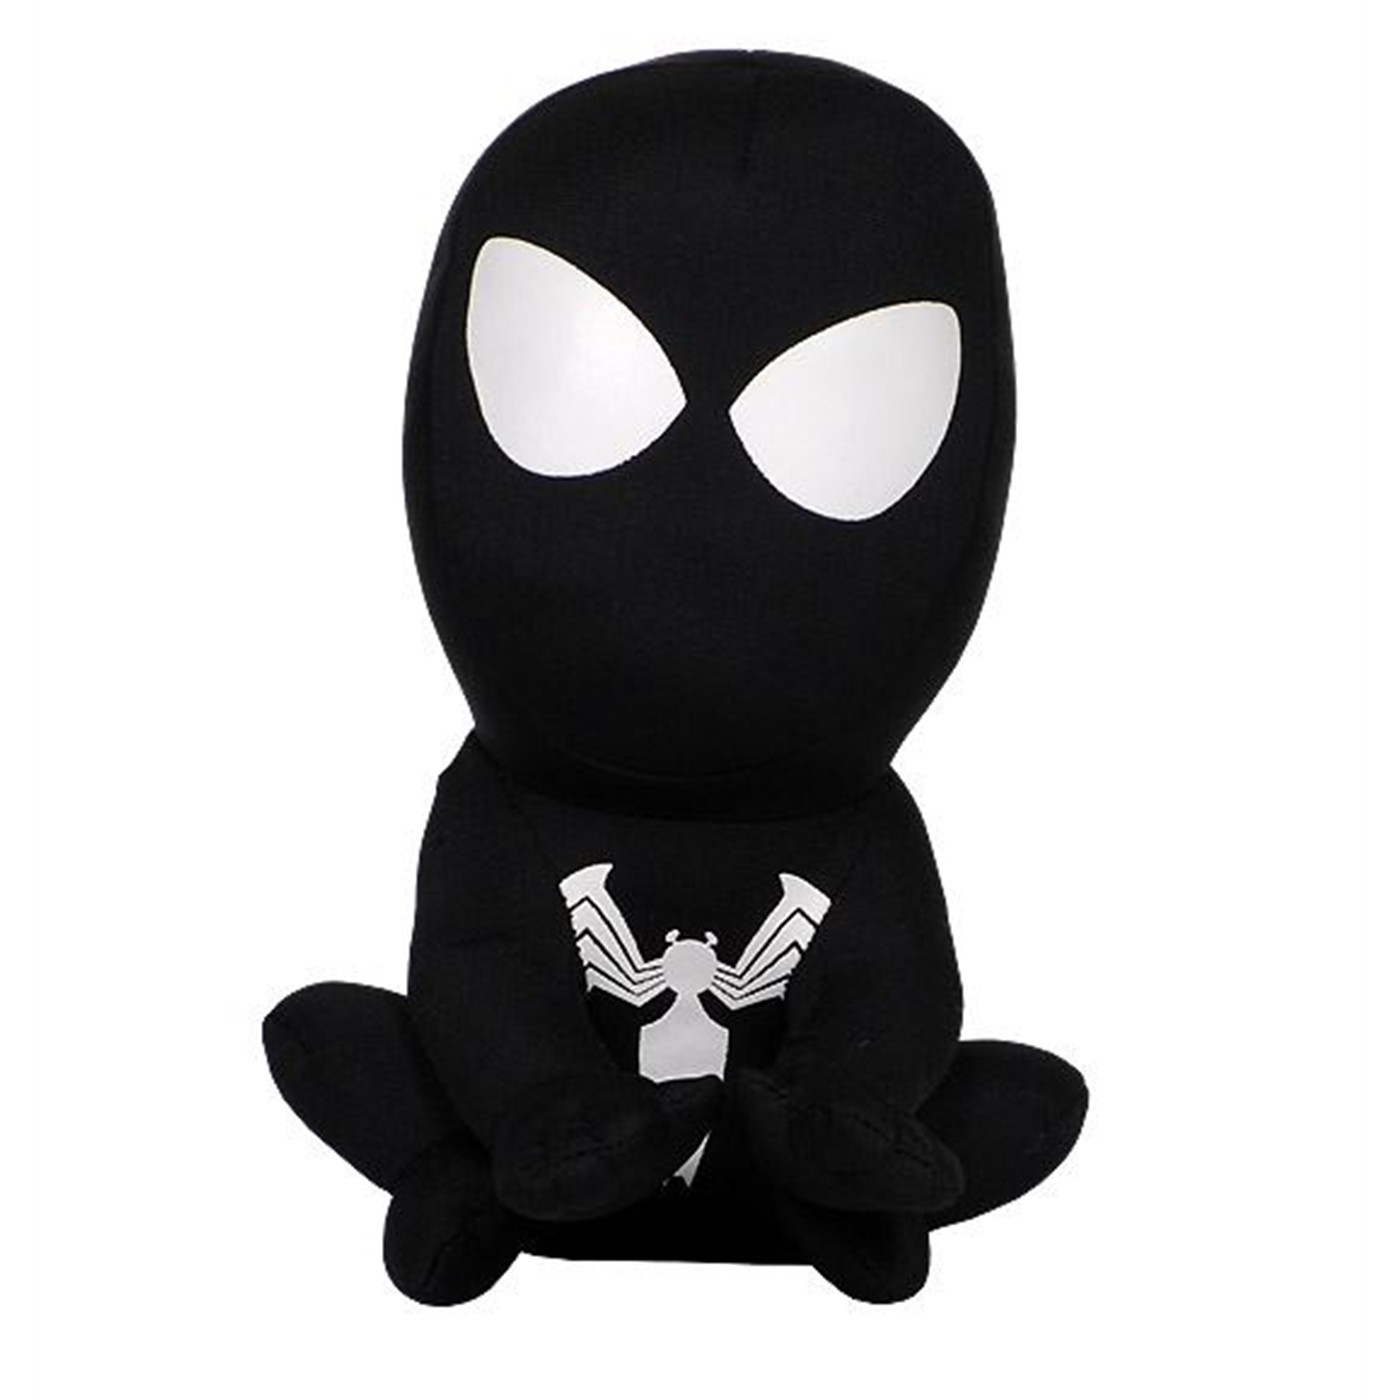 Spiderman Black Super Deformed Plush Toy